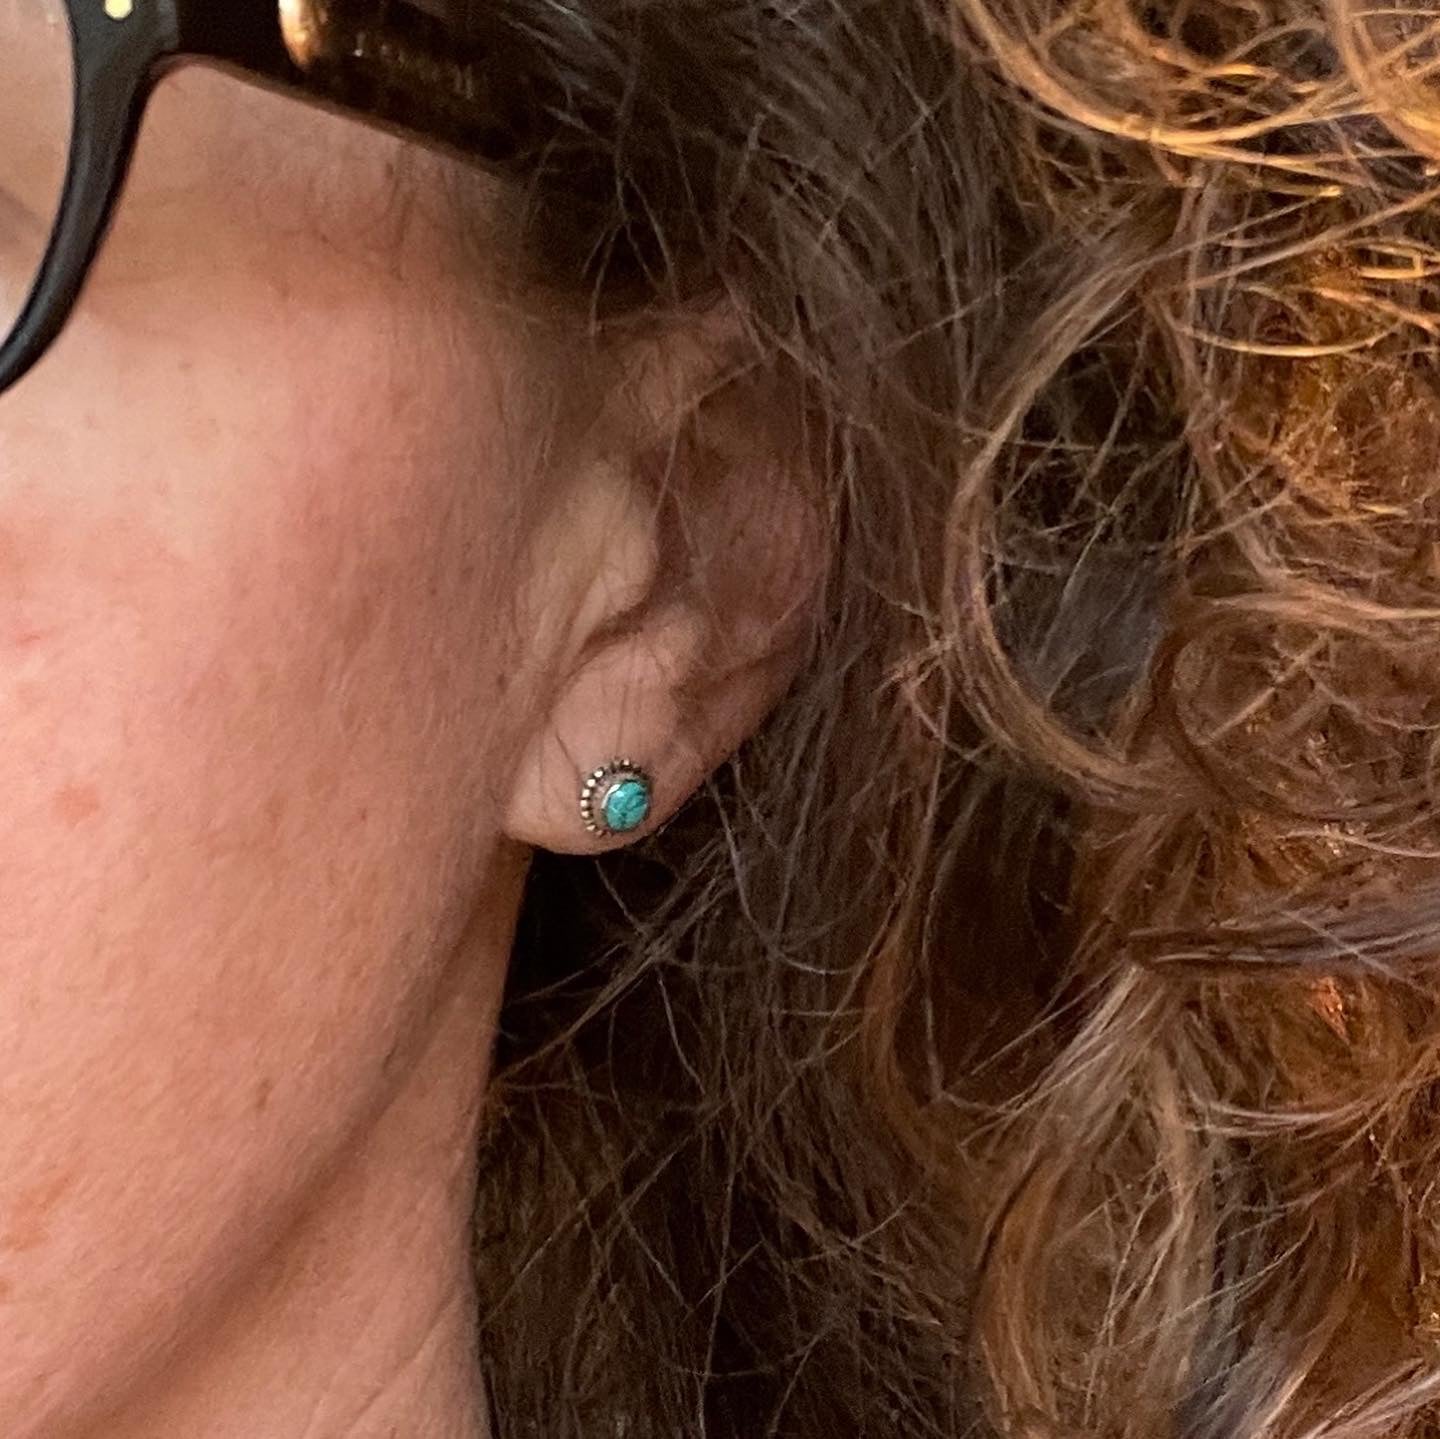 Turquoise stud earrings